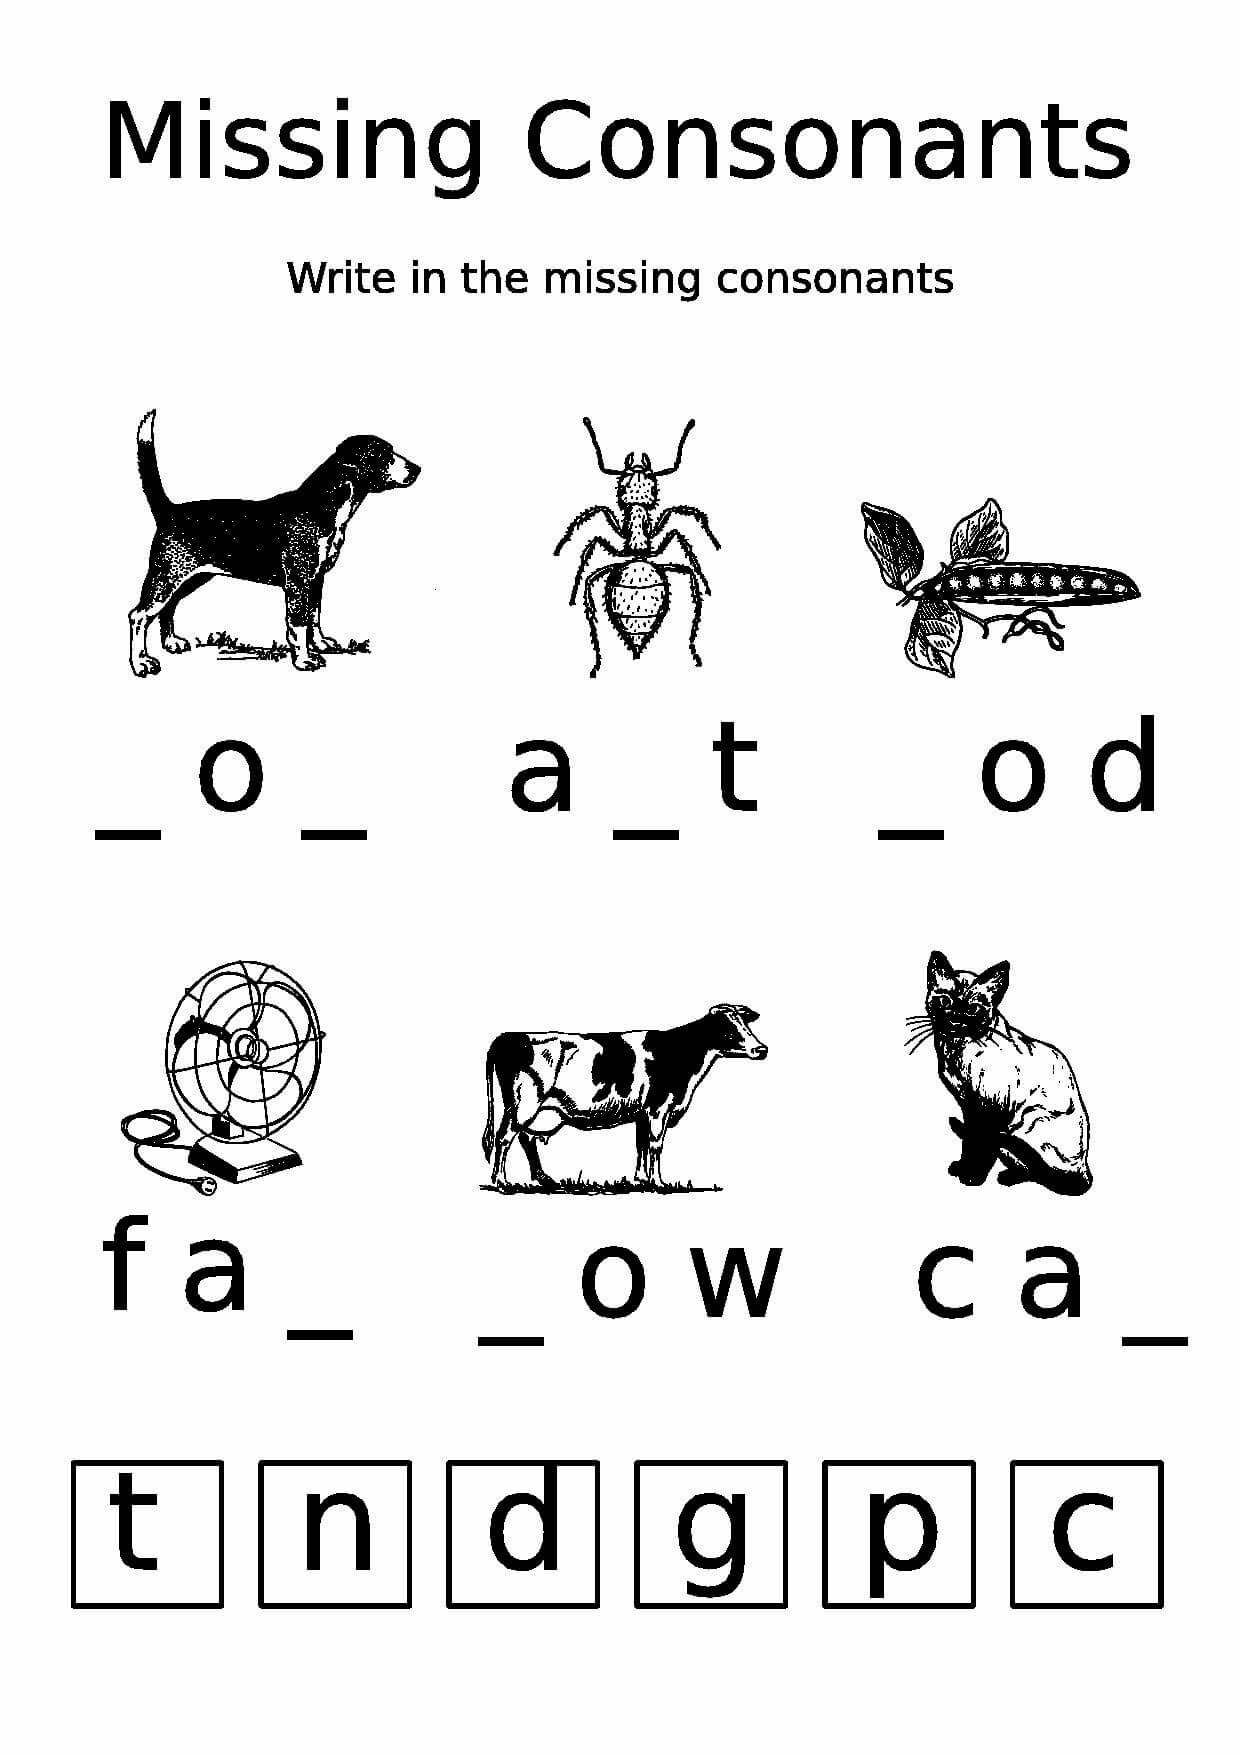 Missing Consonants Worksheet | Free Printable Puzzle Games - Printable Missing Vowels Puzzles